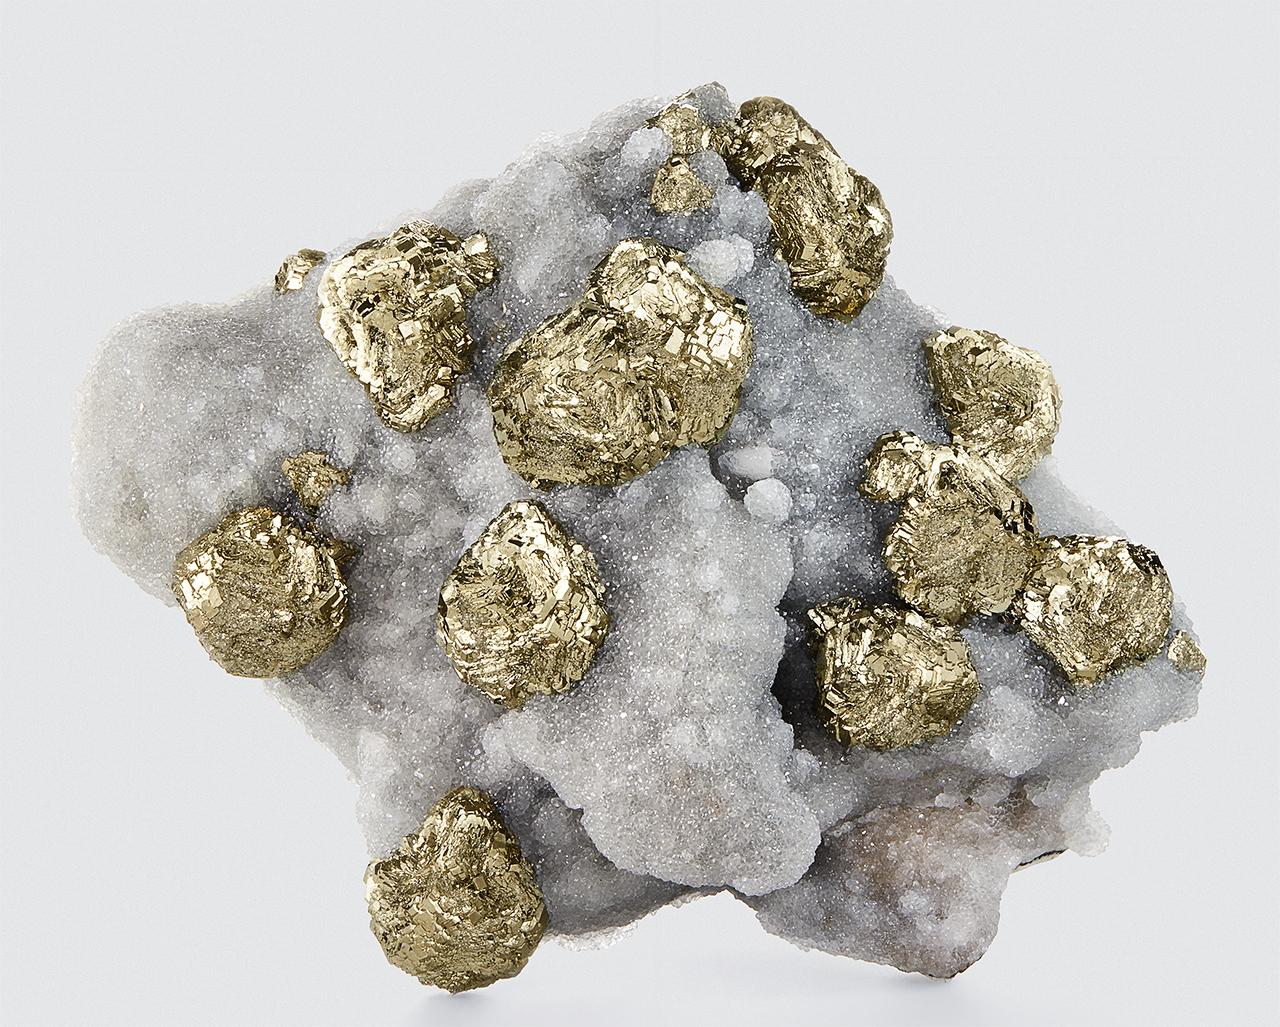 Pyrite on Quartz, Fengjiashan Mine, Edong Mining Dist., Daye Co., Huangshi Pref., Hubei Prov., China
Measures: 16 cm tall x 18 cm wide.